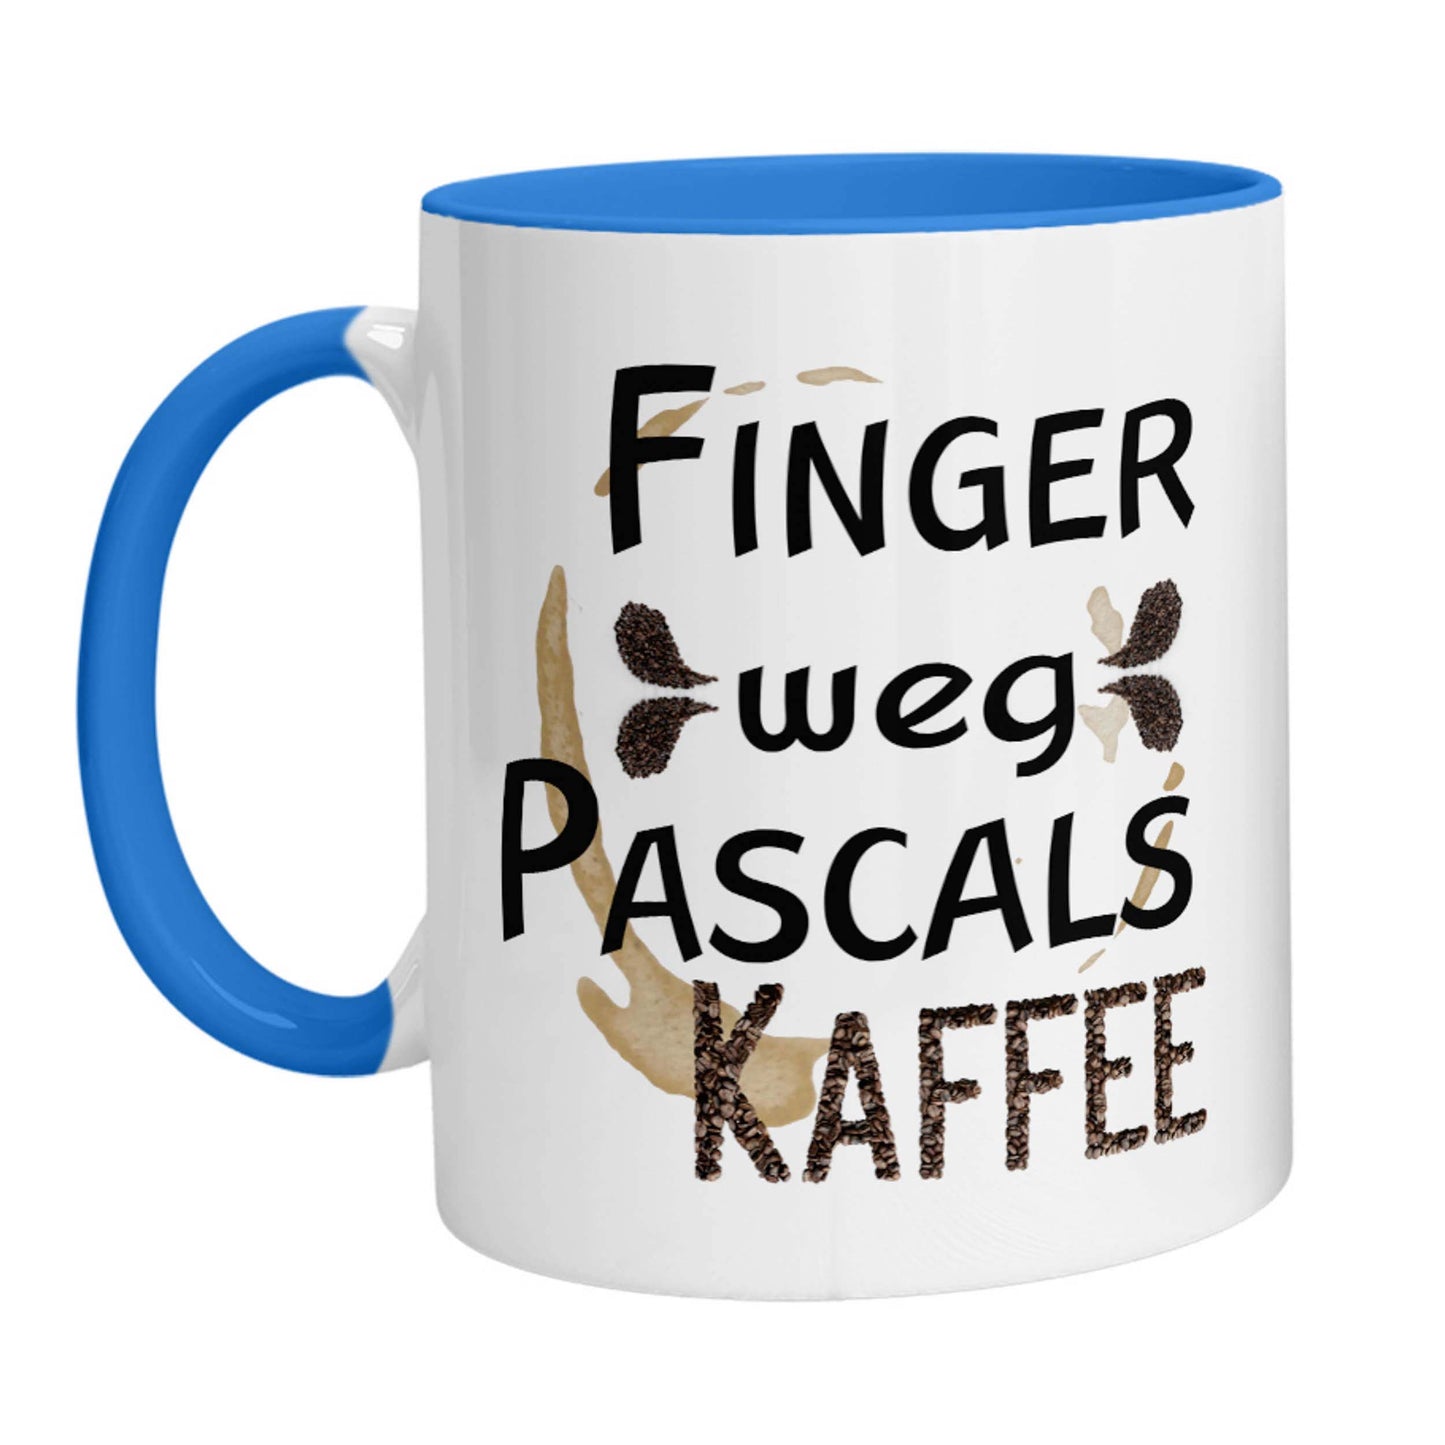 Tasse - Finger weg (Personalisiert) Kaffee